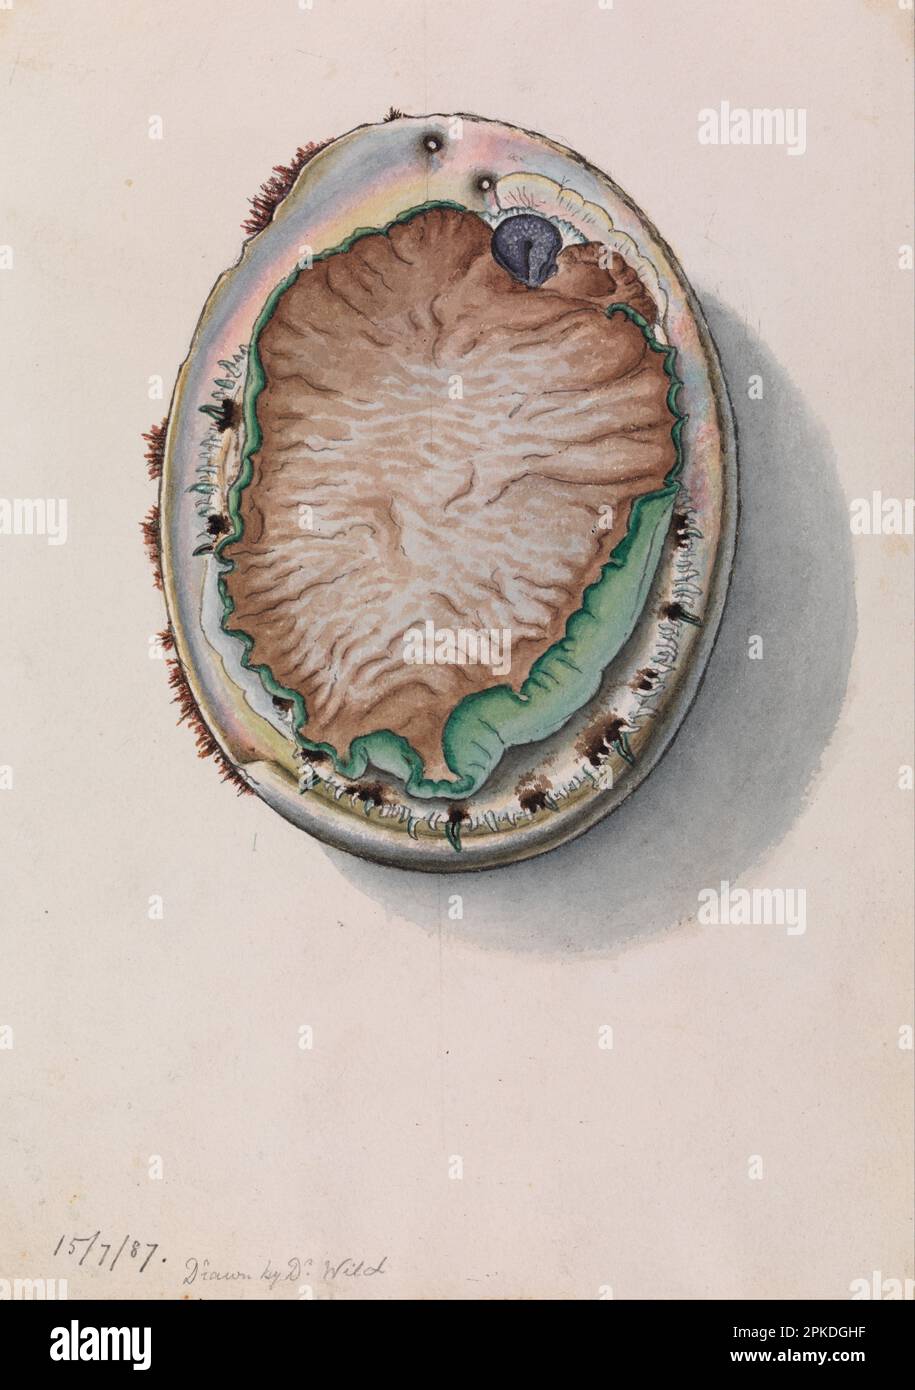 Grünlippige Abalone, Haliotis laevigata 1887 von John James Wild Stockfoto